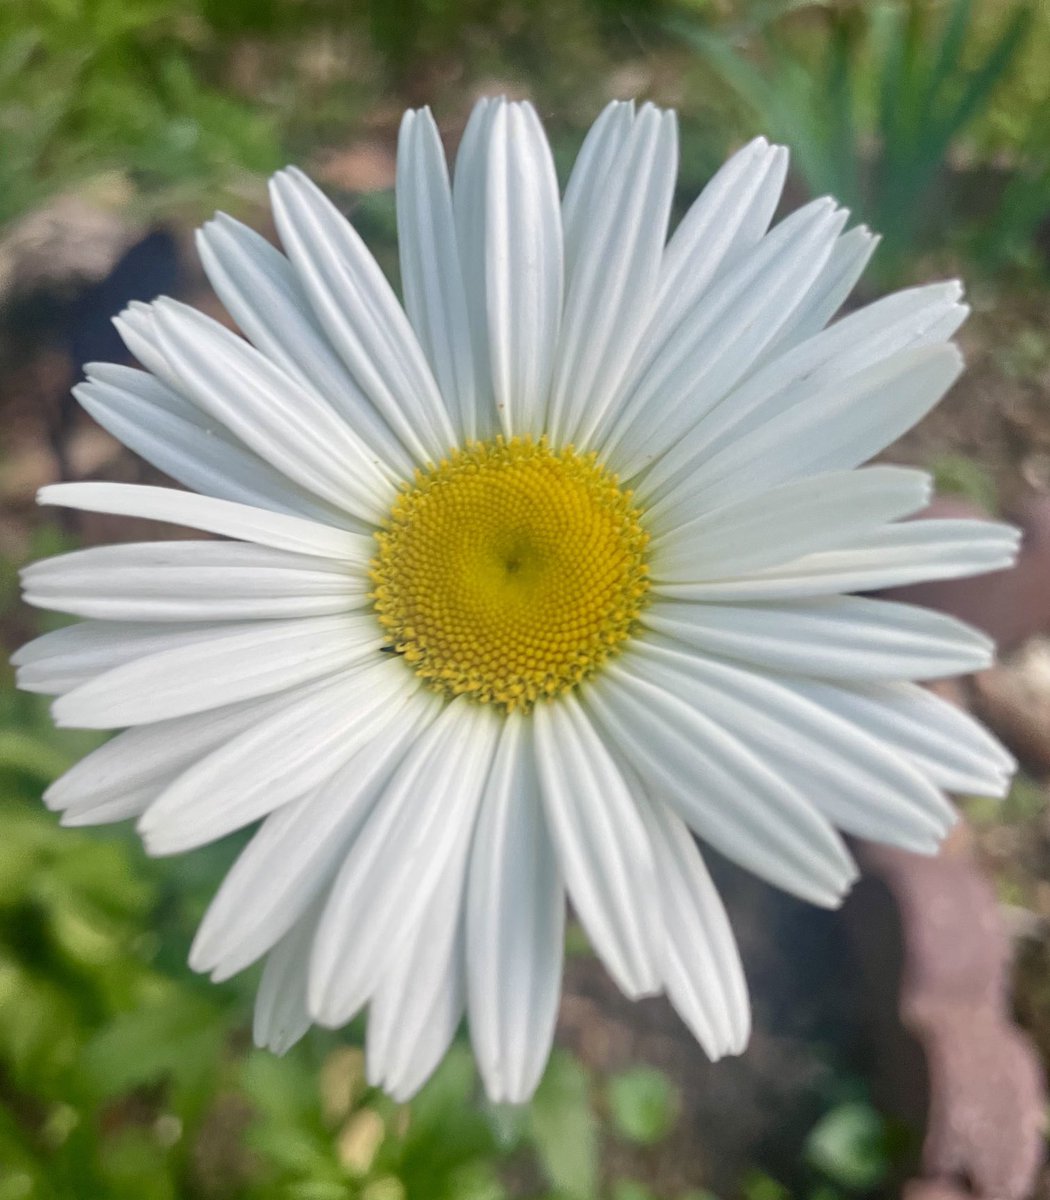 It's the perfection of Shasta Daisy that makes my garden so beautiful. #garden #daisy #flowers